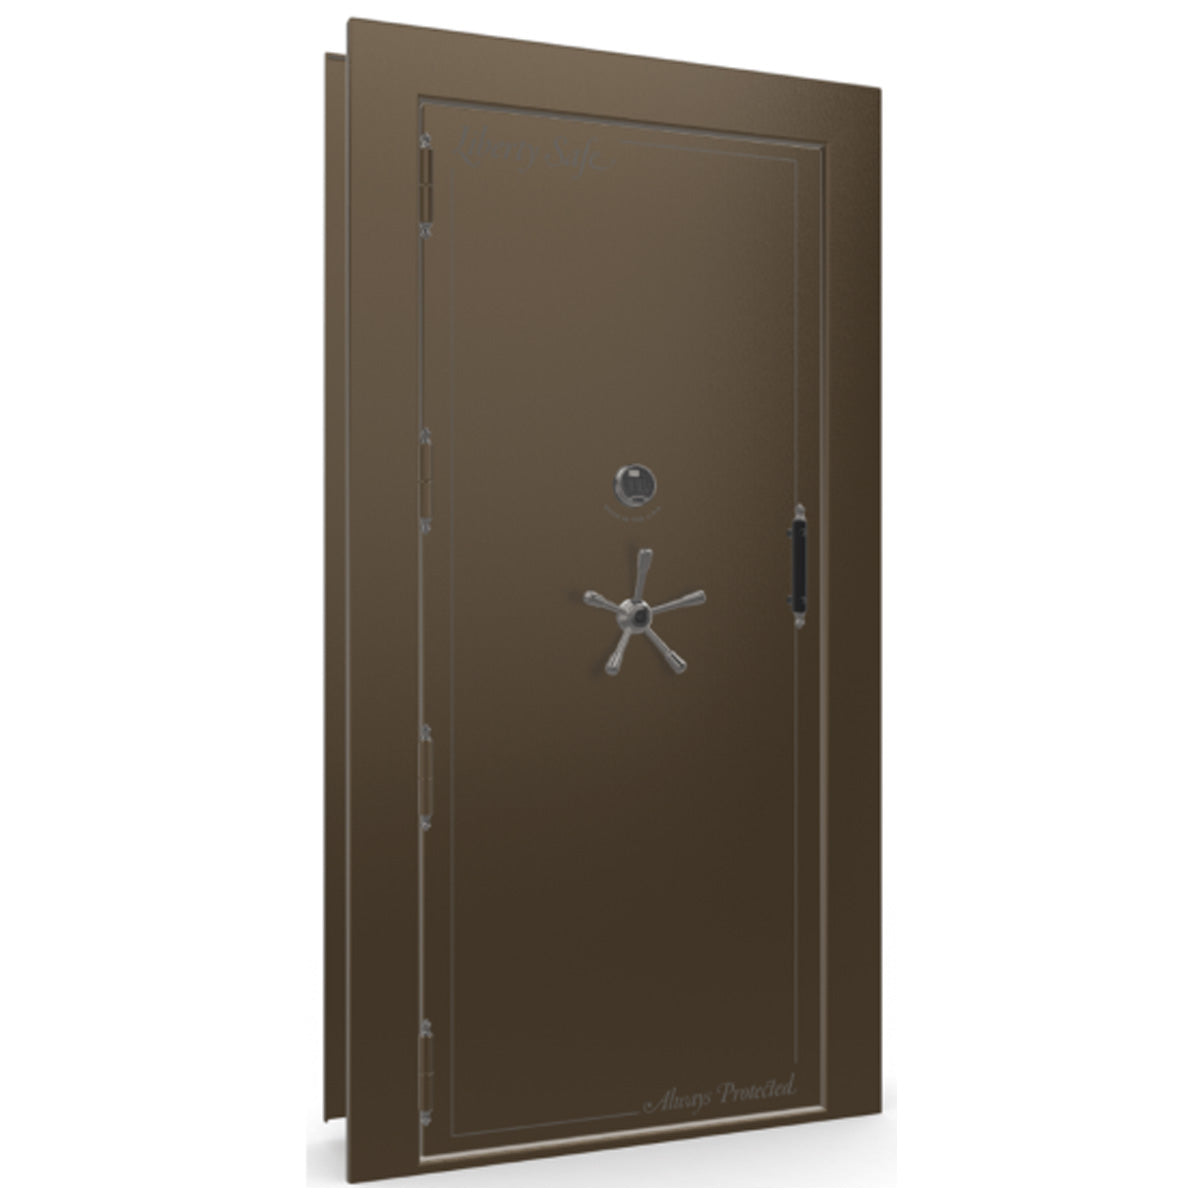 The Beast Vault Door in Bronze Gloss with Black Chrome Electronic Lock, Left Outswing, door closed.